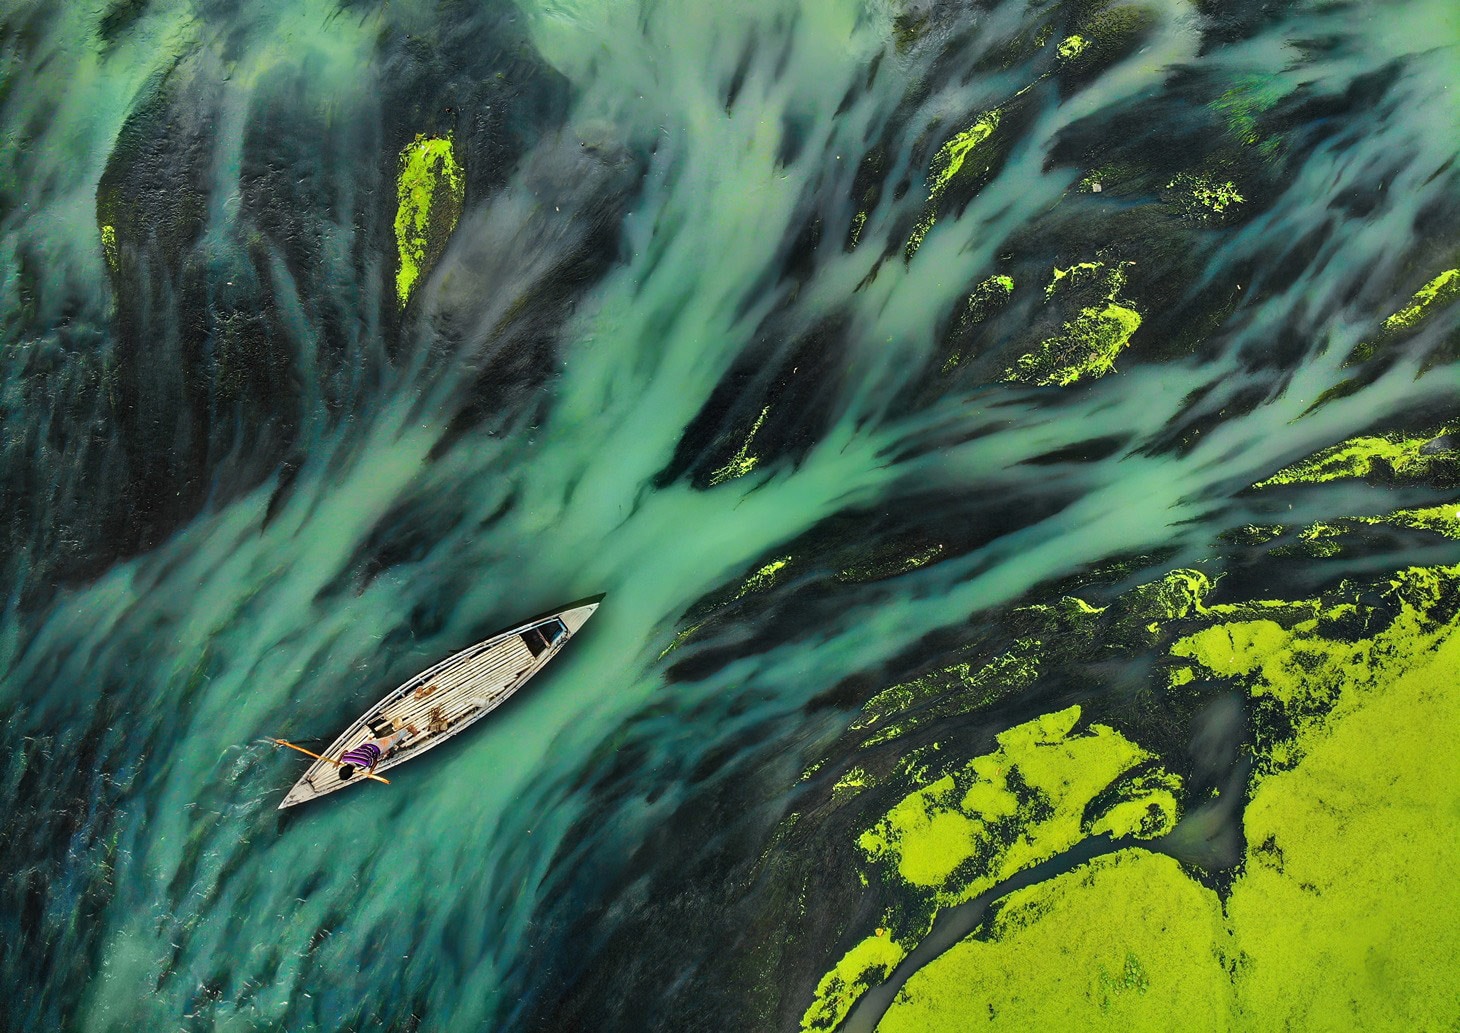 Canoe rowing through green water